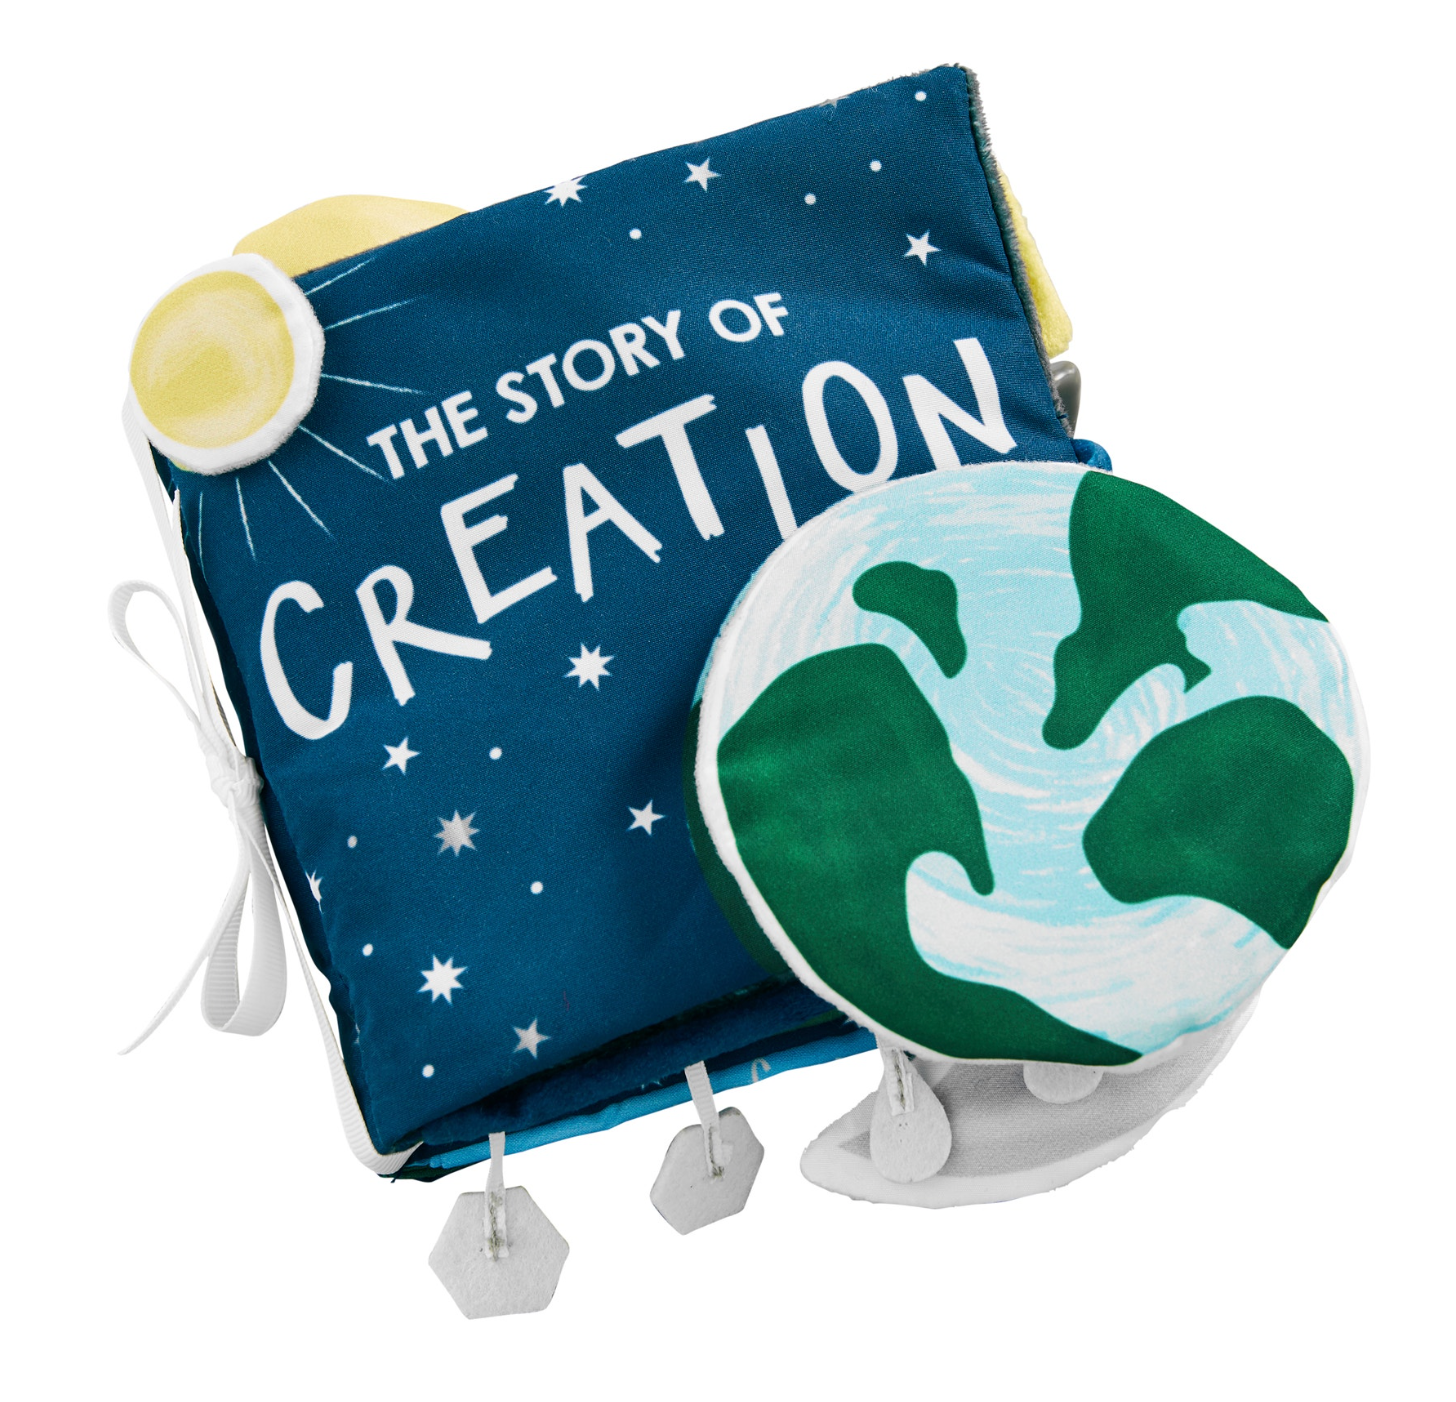 CREATION BOOK